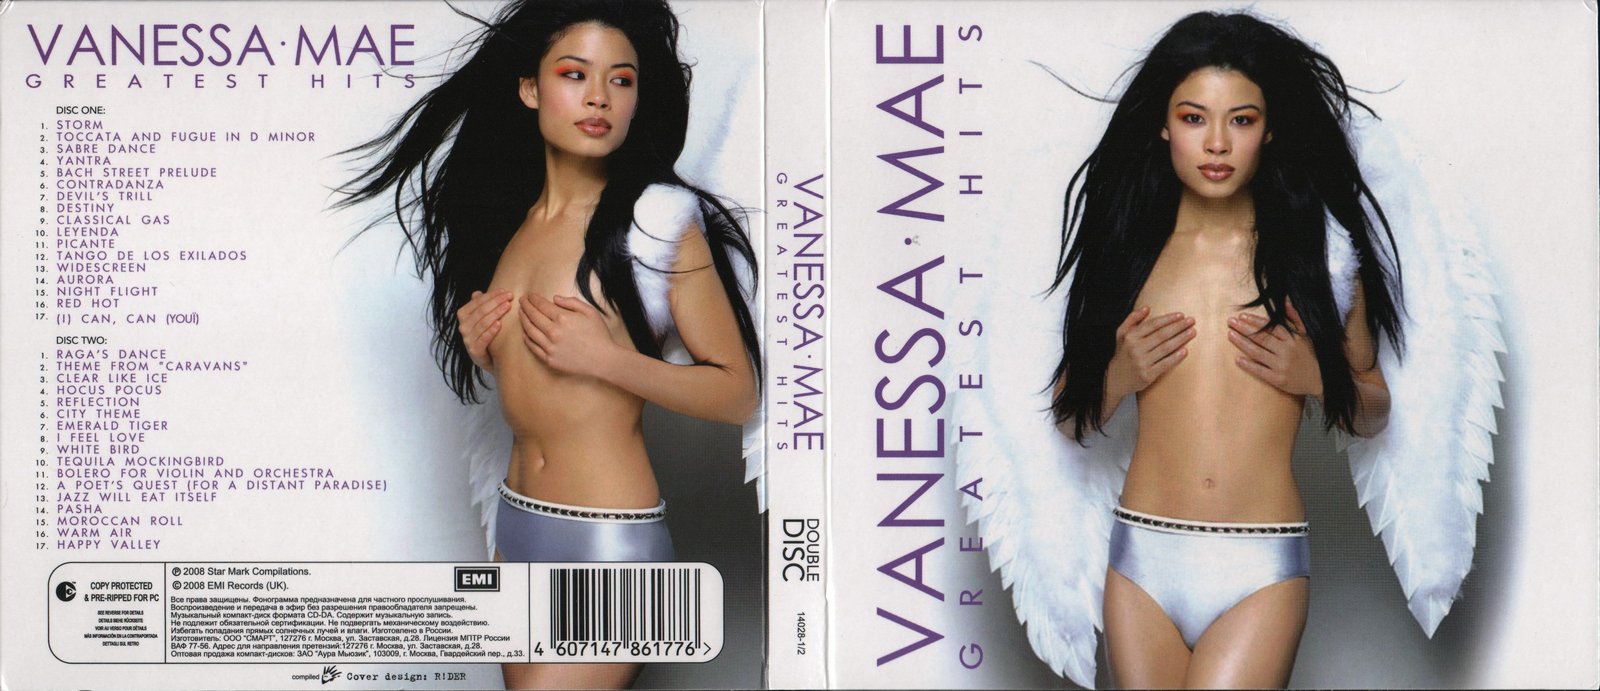 Vanessa mae nackt